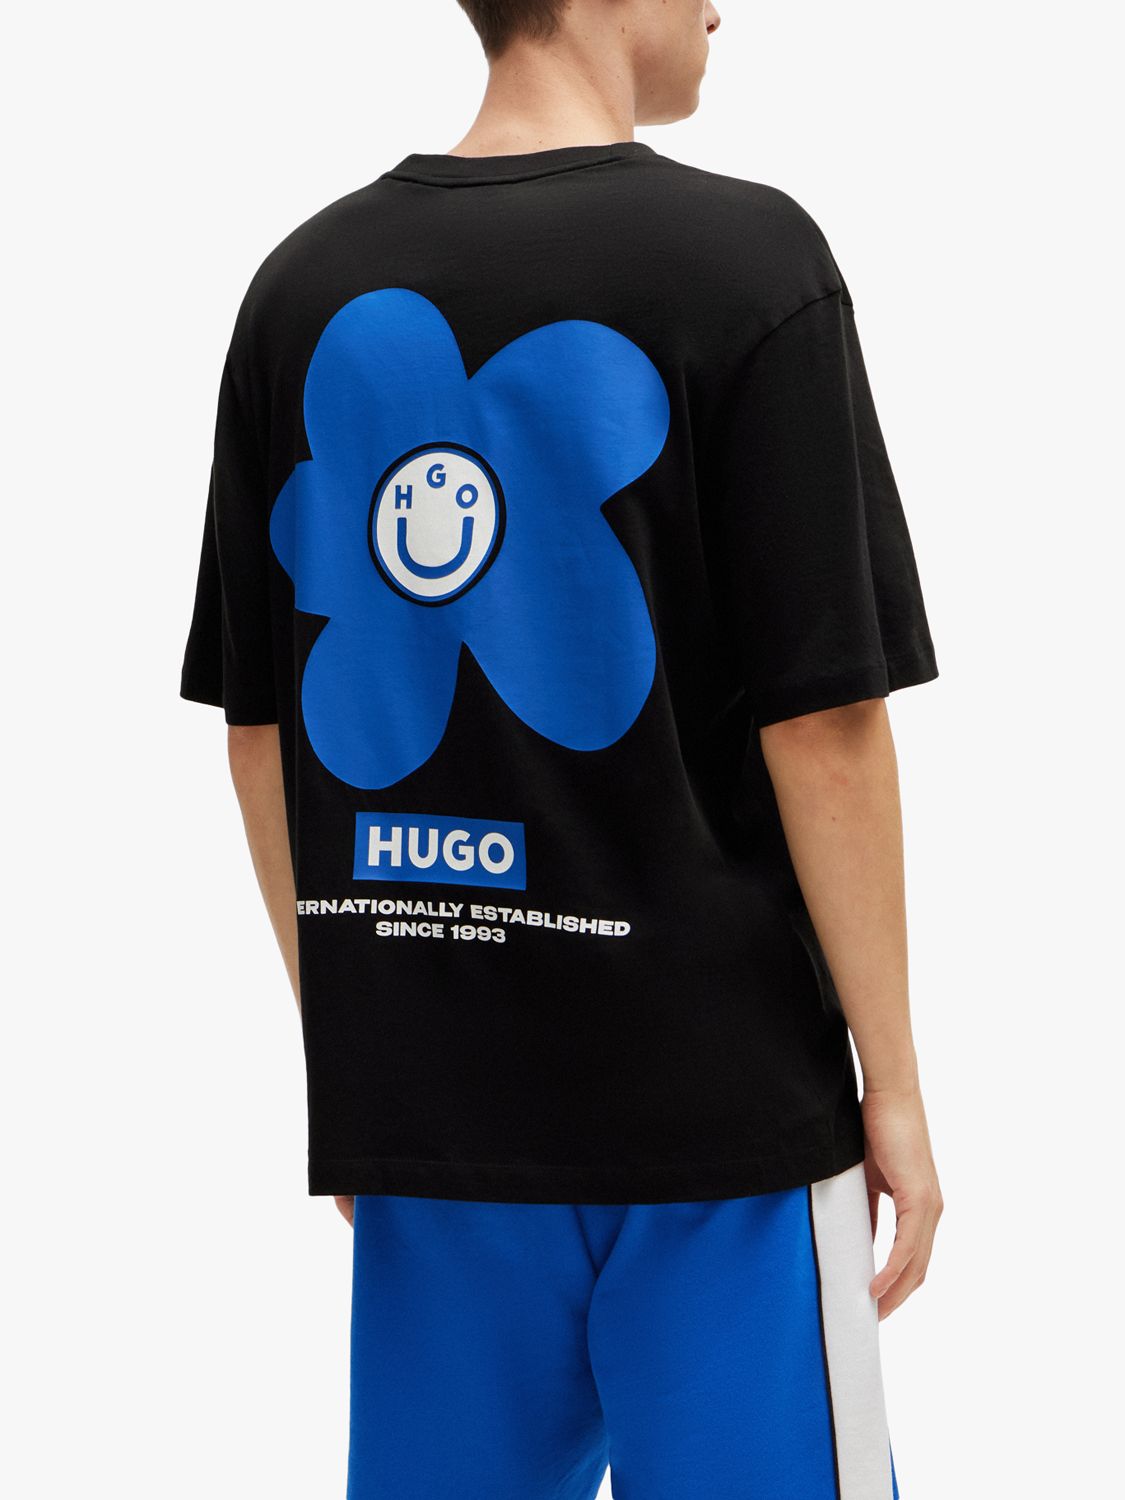 Buy HUGO Noretto Cotton T-Shirt, Black Online at johnlewis.com